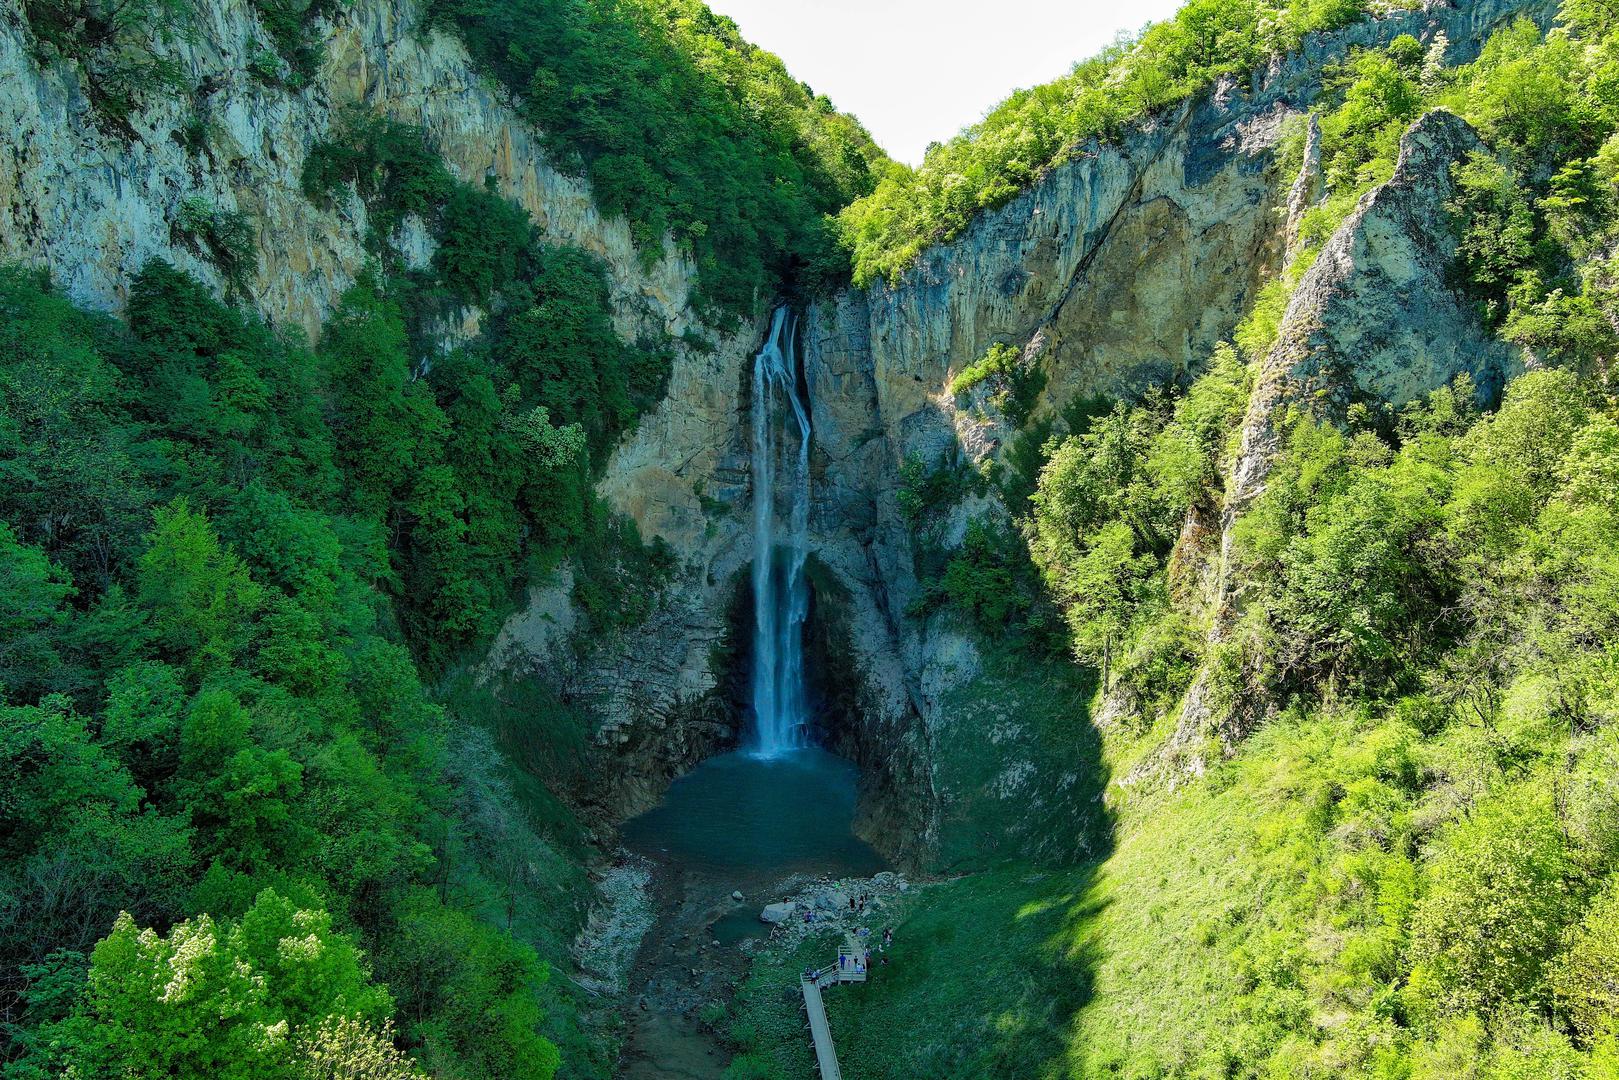 Vodopad Bliha, poznat i kao Blihin skok, jedan je od najimpresivnijih vodopada, a privlači brojne turiste i zaljubljenike u prirodu.